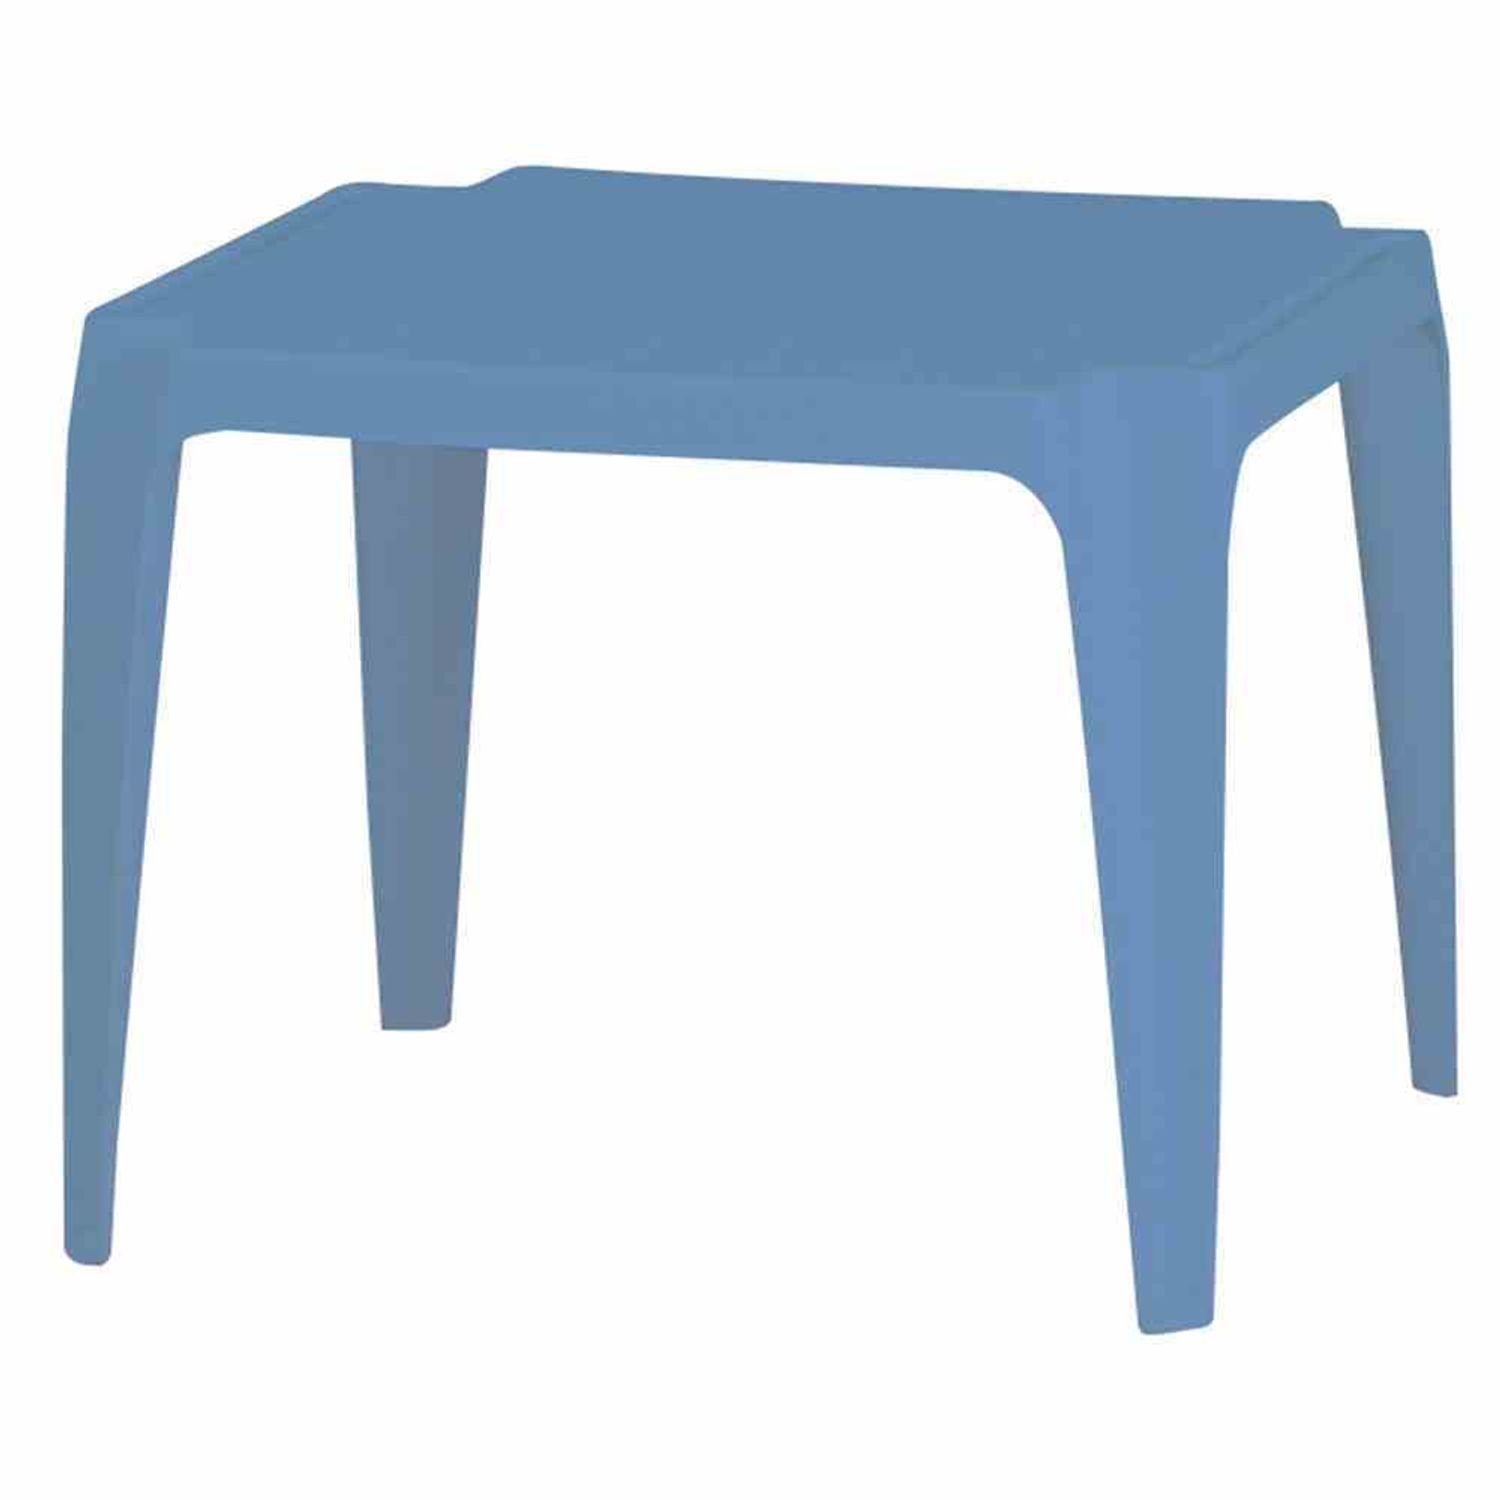 Ipae-Progarden Gartentisch Kindertisch, 50x50 cm, hellblau Vollkunststoff, Monoblock, stapelbar